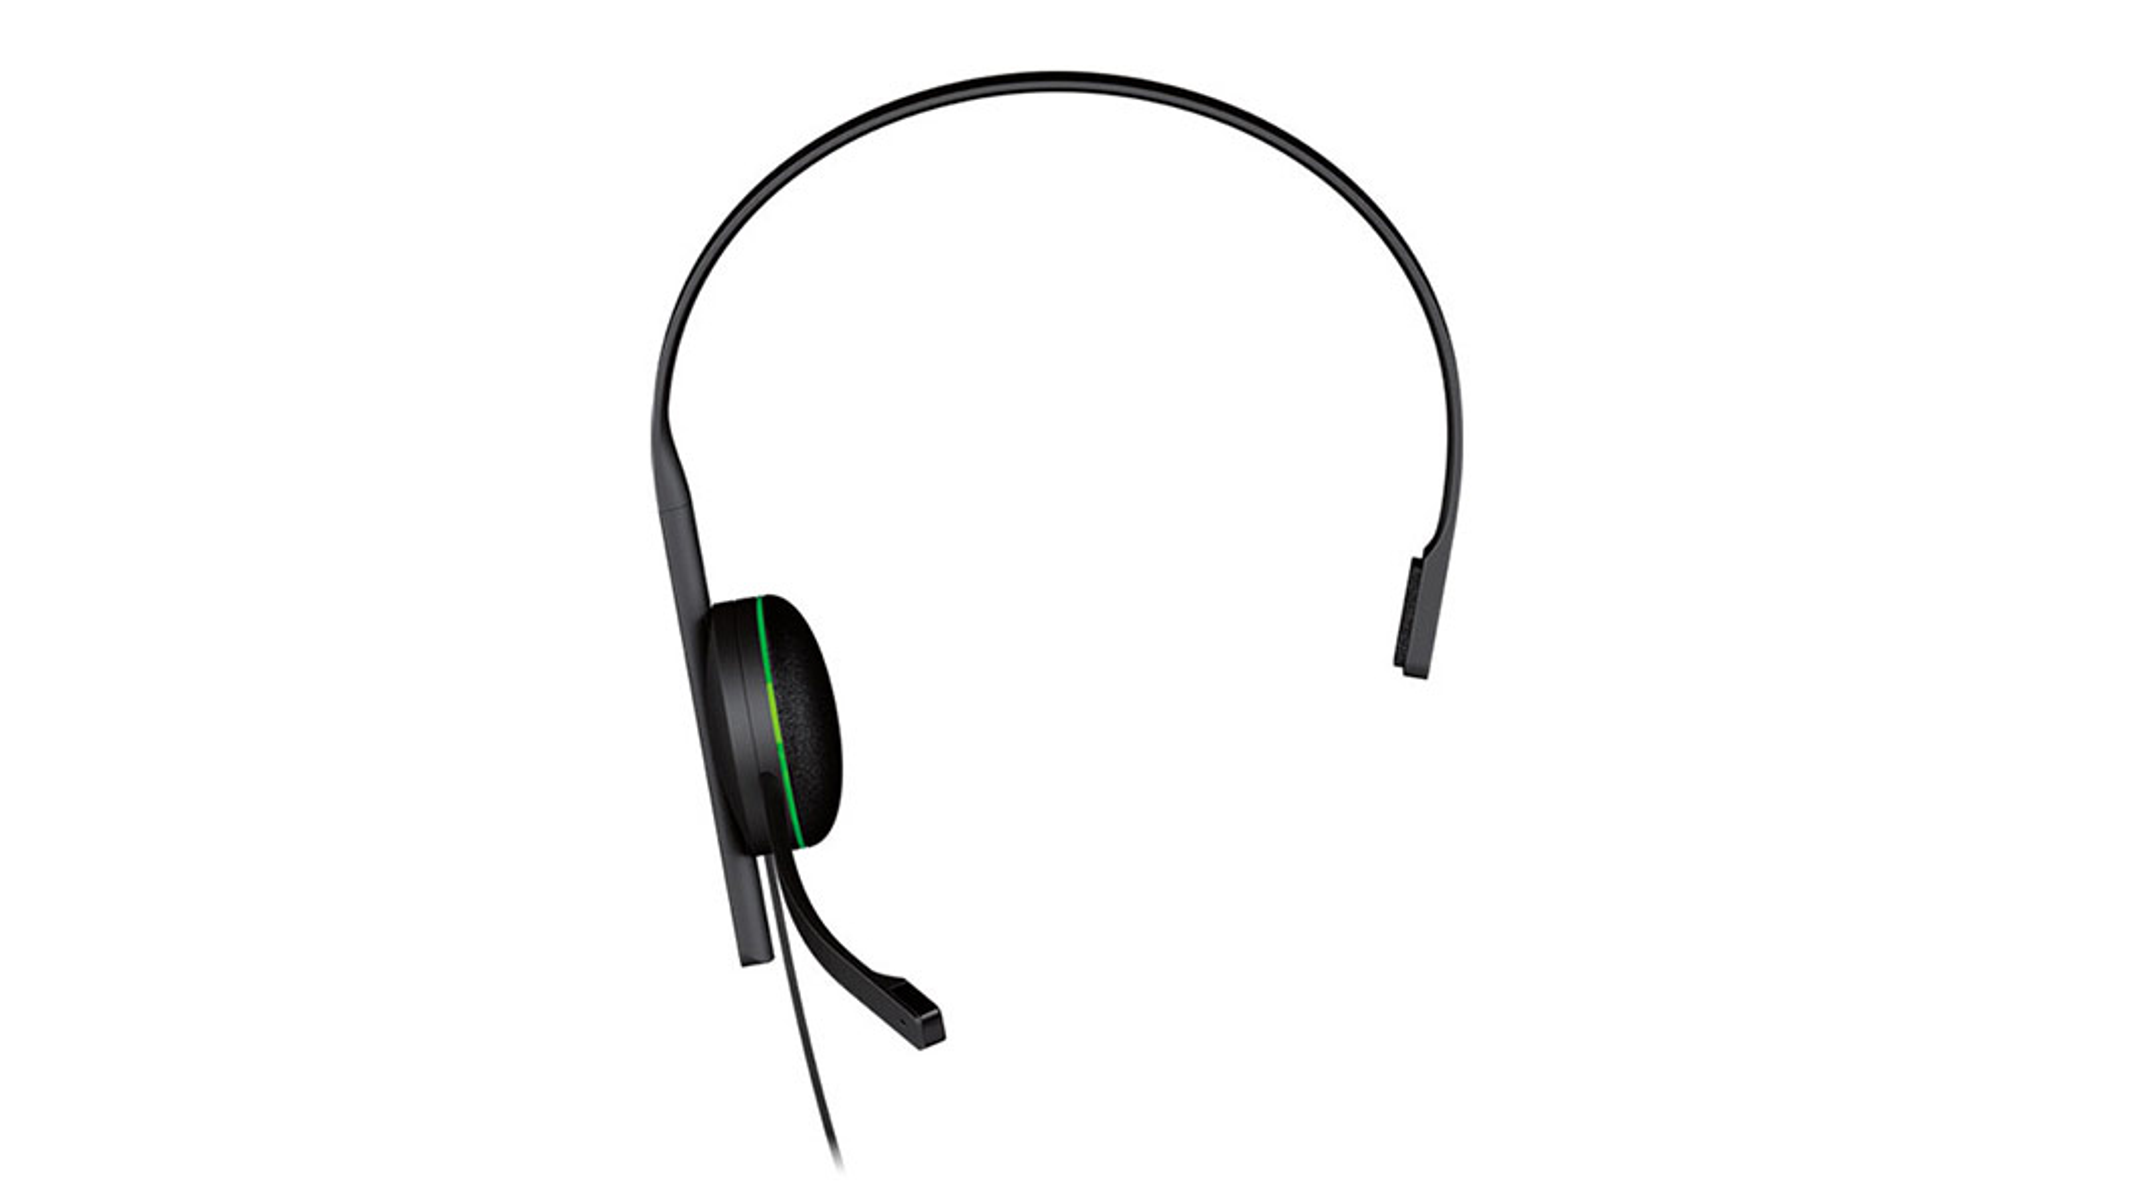 MICROSOFT In-ear Headset S5V-00015 CHAT Schwarz ONE XBOX HEADSET,